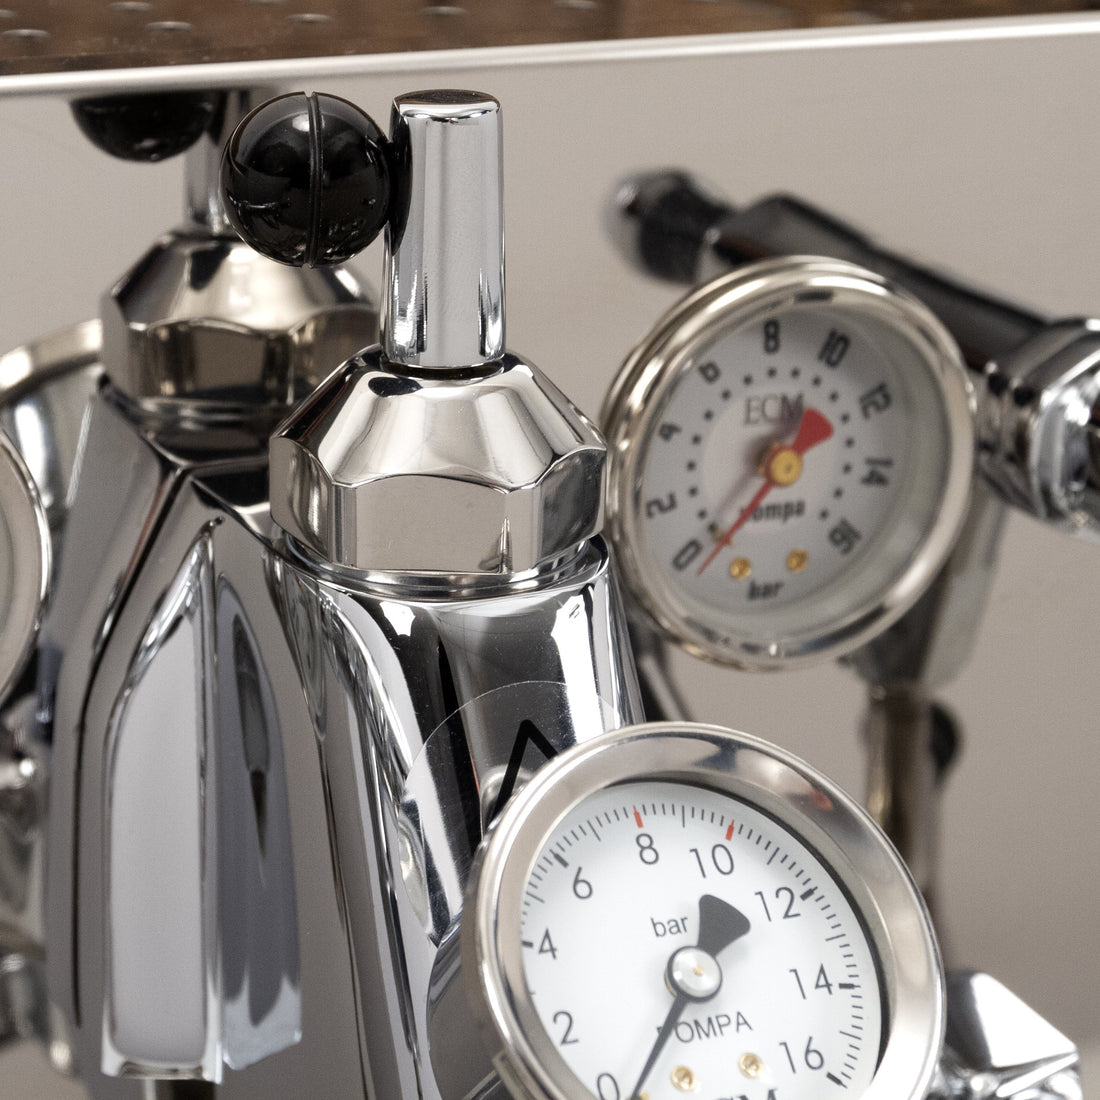 Brew pressure gauge